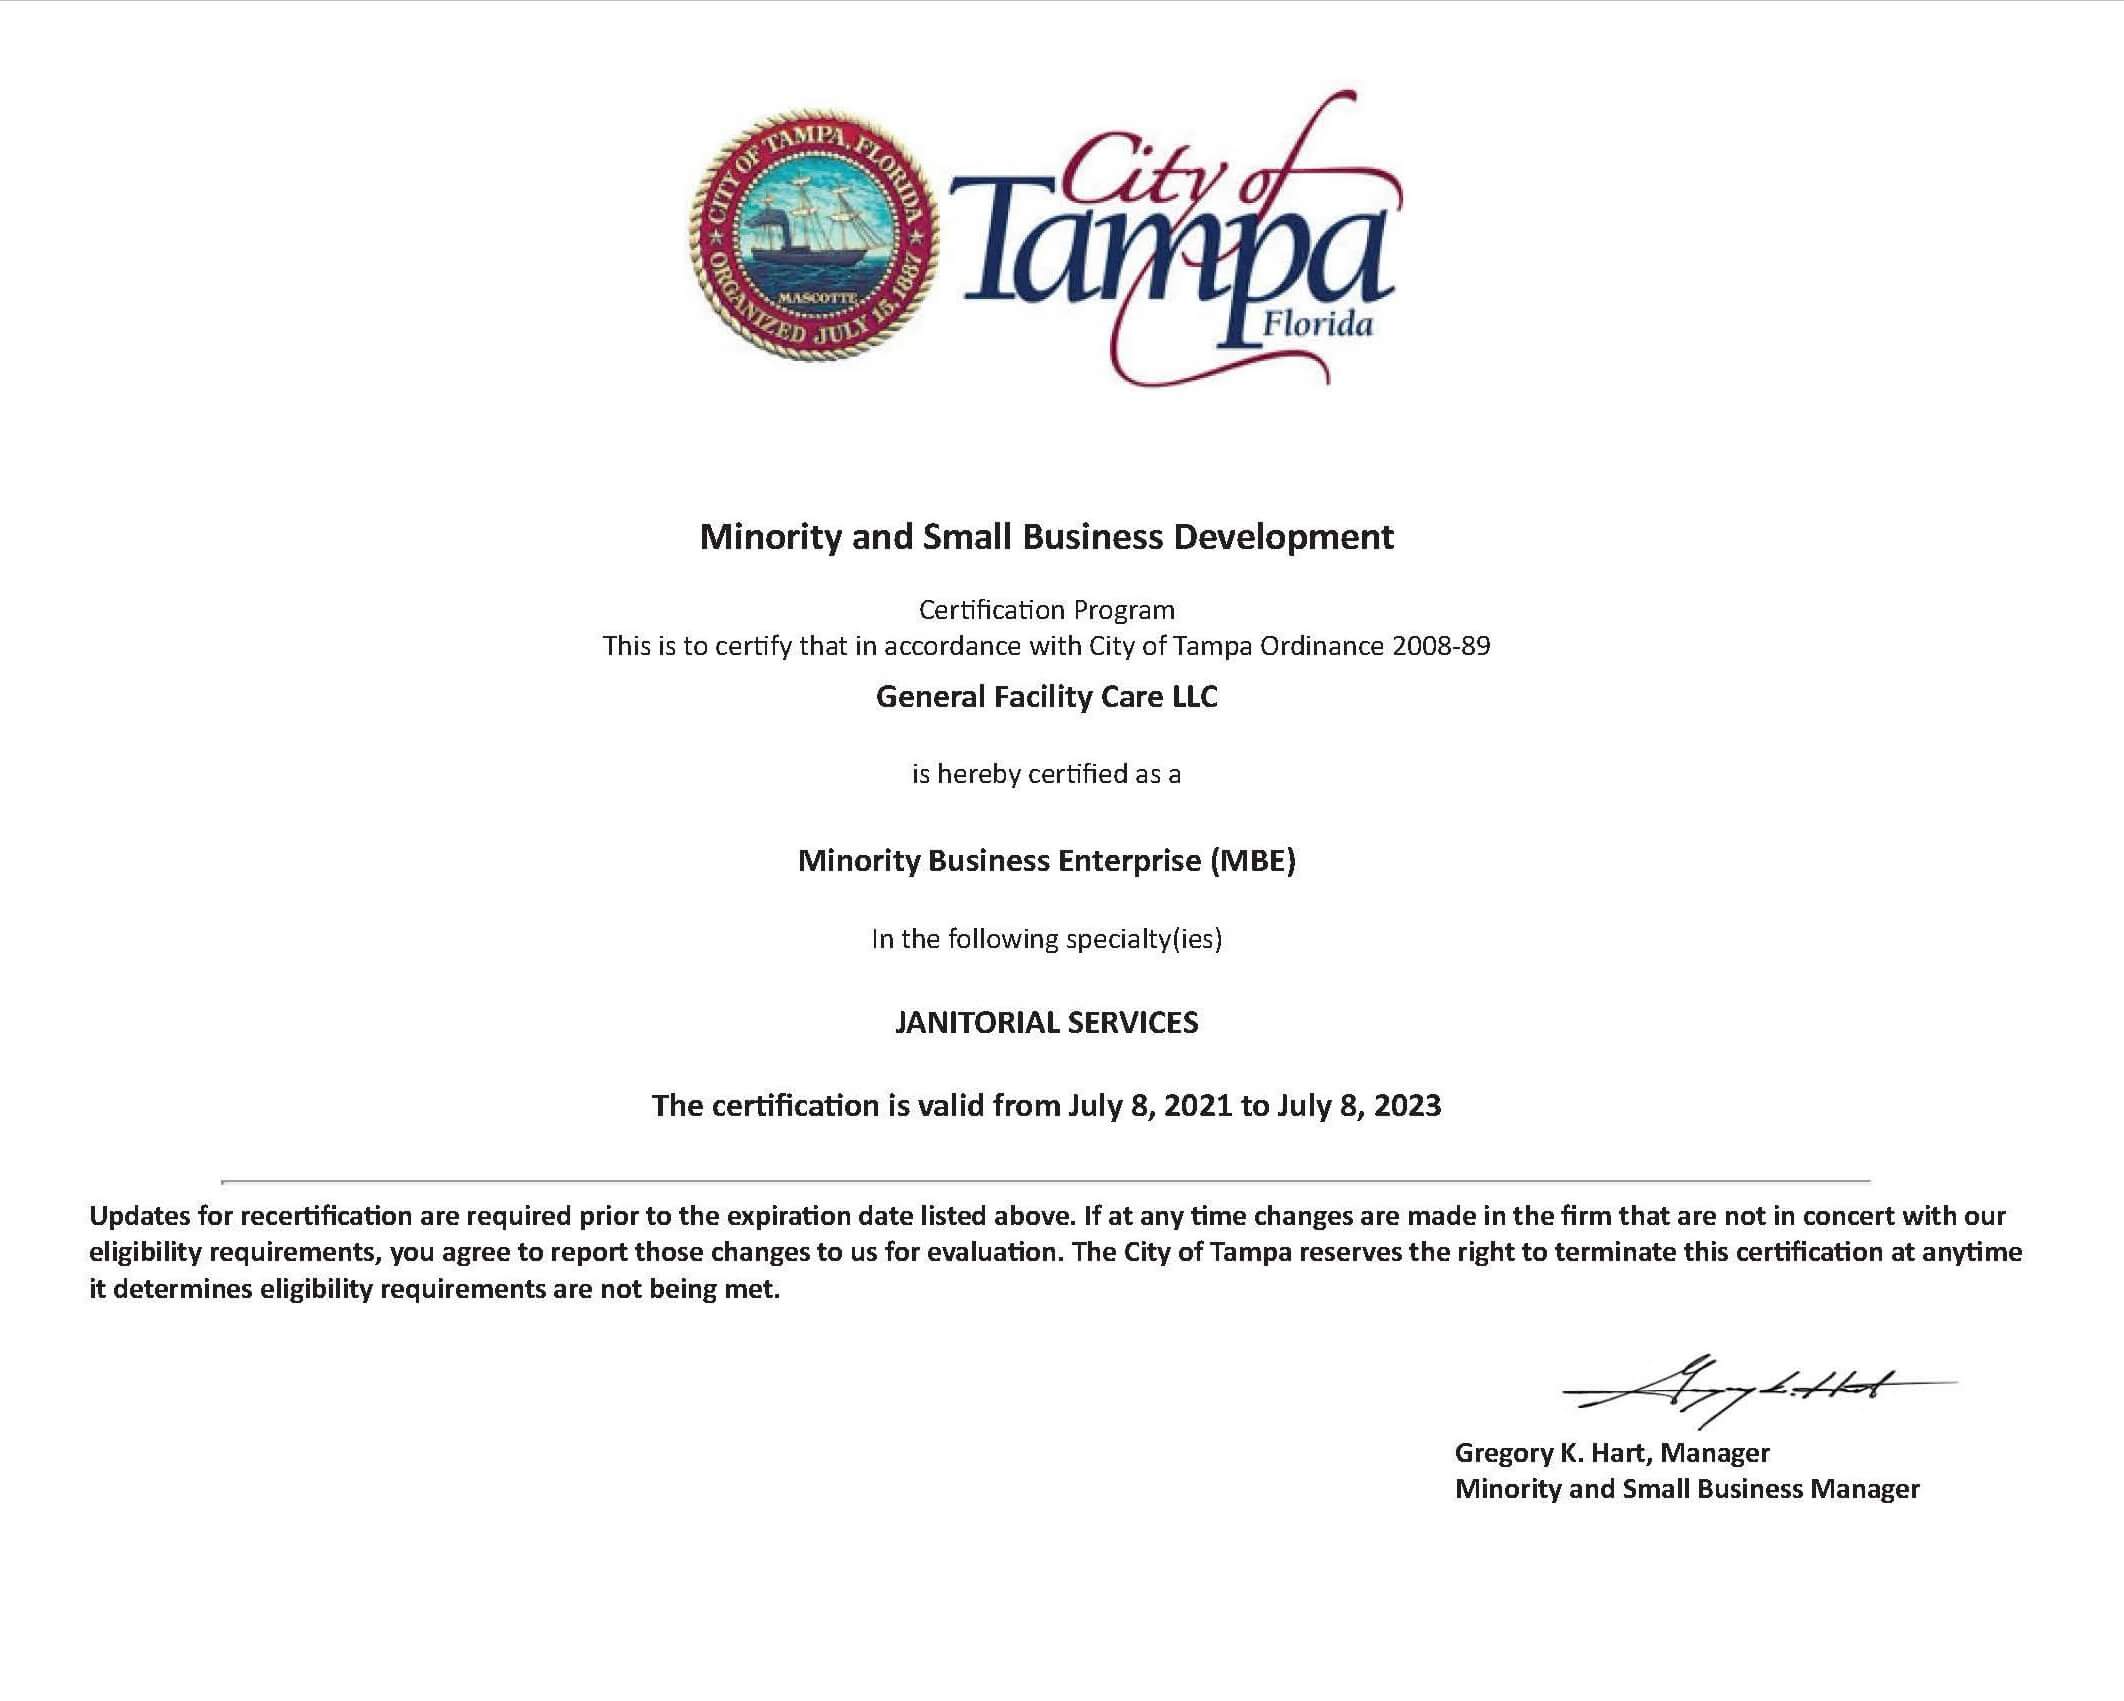 General Facility Care LLC's Certificate